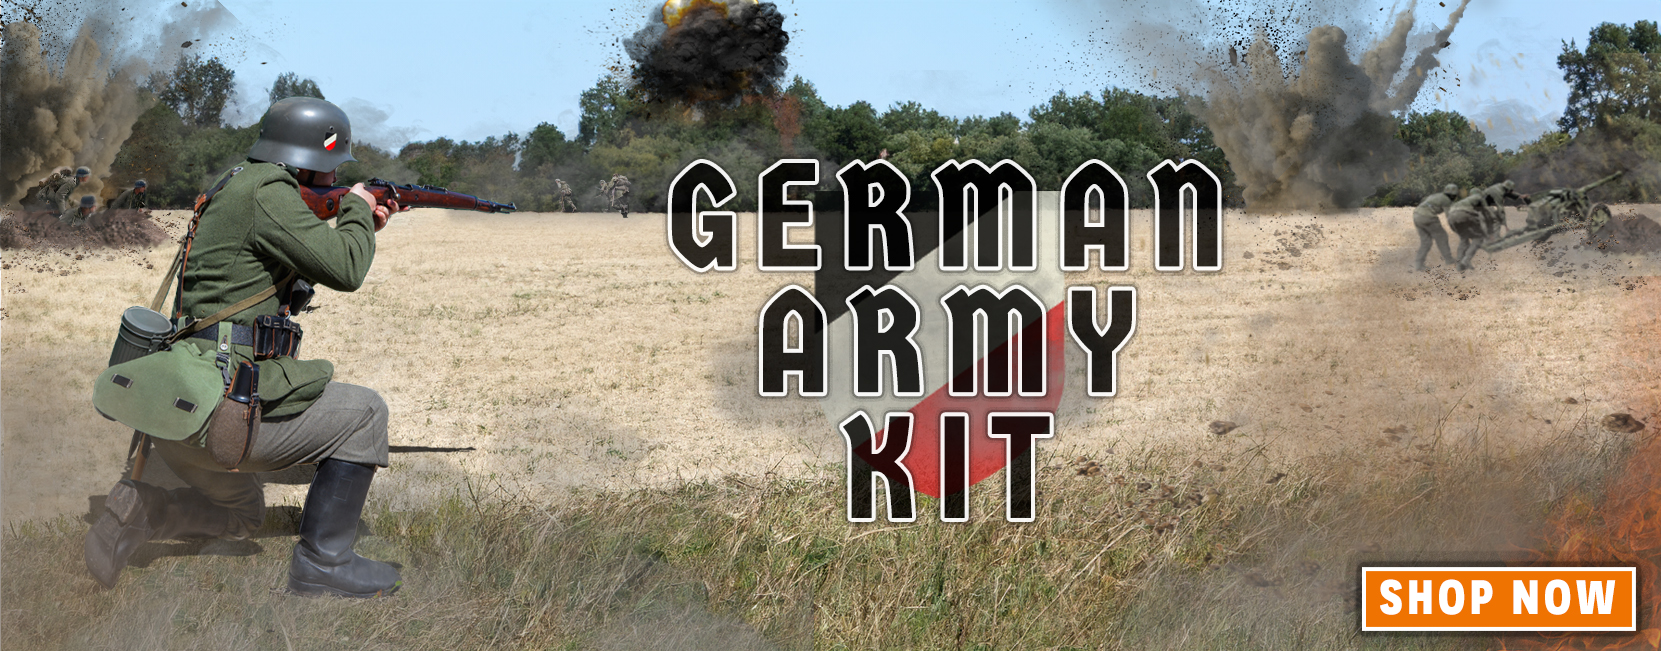 German Army Banner